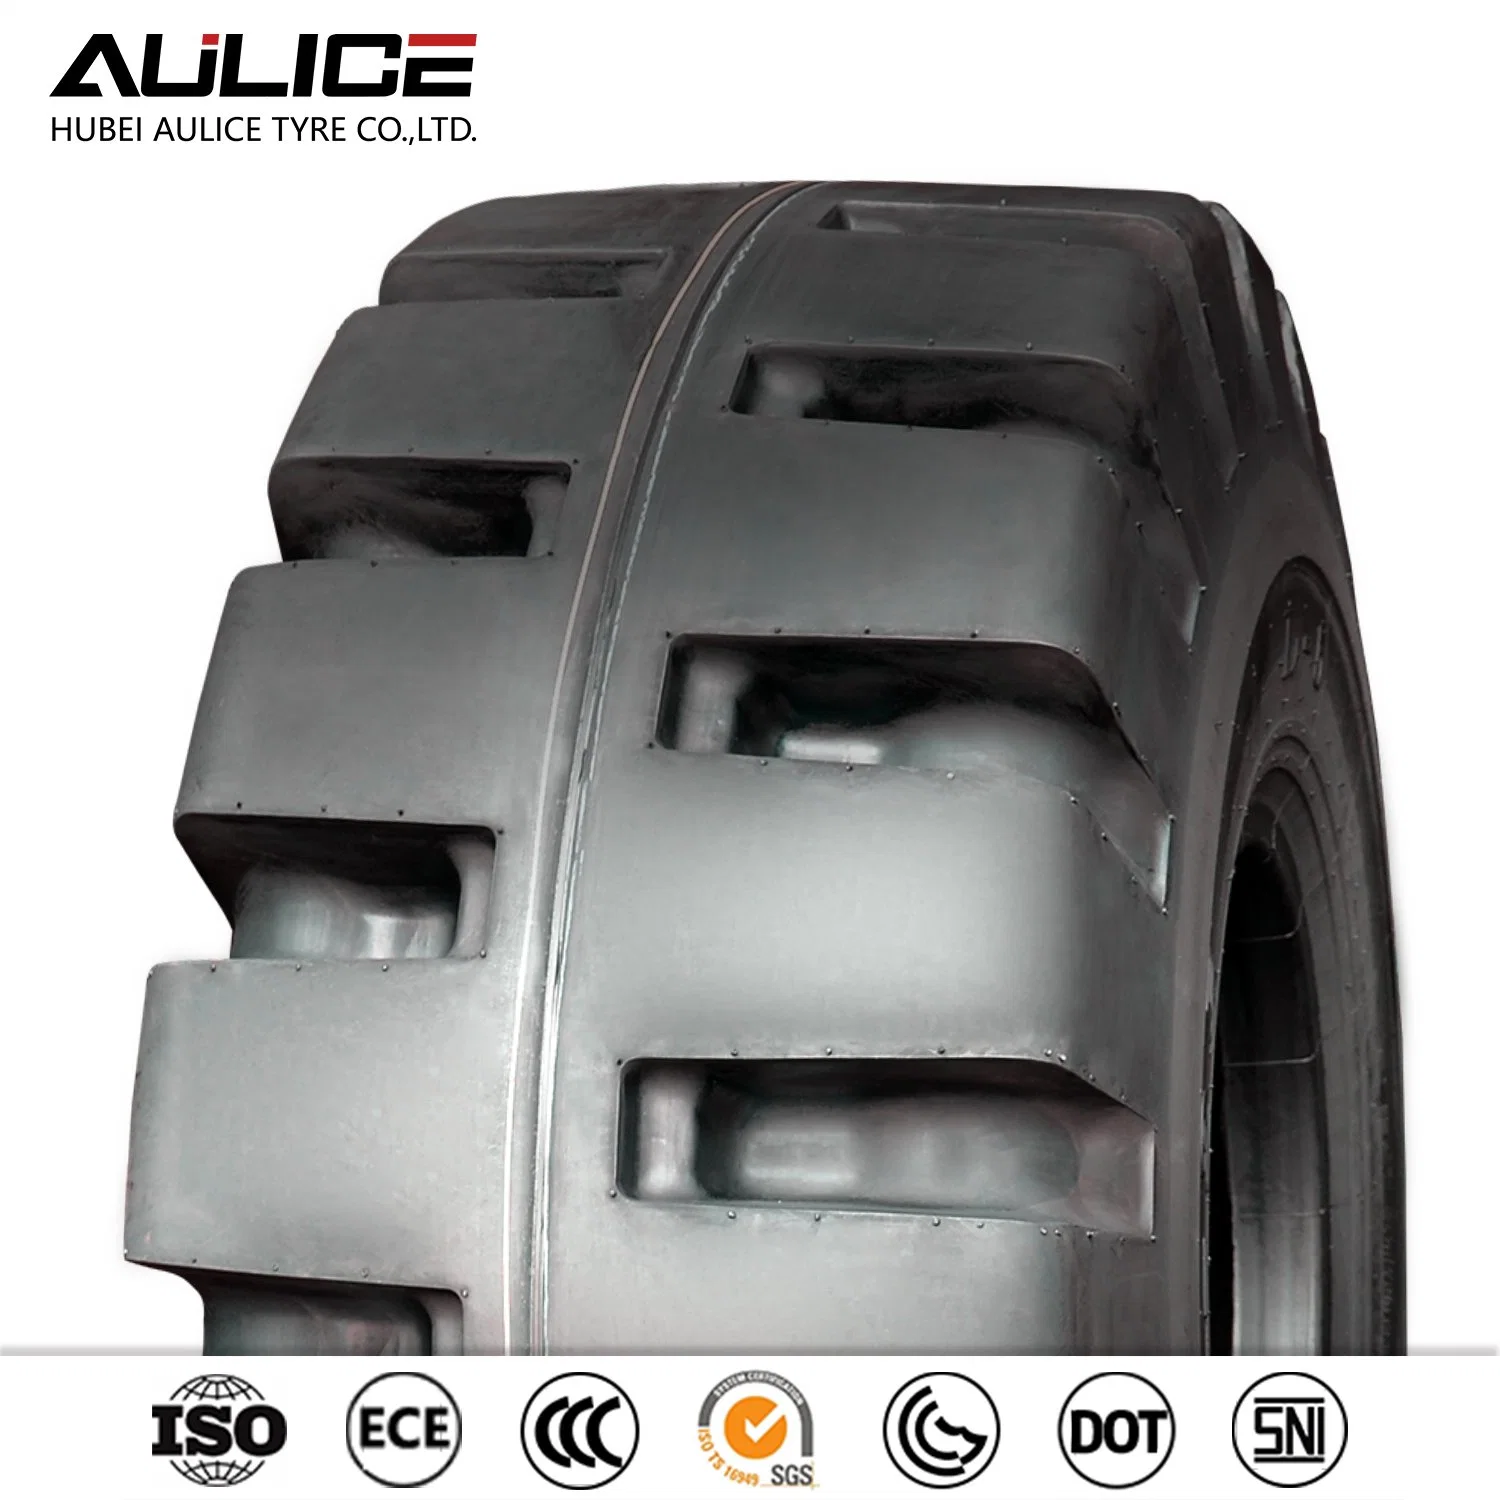 Aulice Markenreifen L-5 23.5-25 OTR Reifen Off Road Reifen Baureifen Bergbau Reifen zum Verkauf